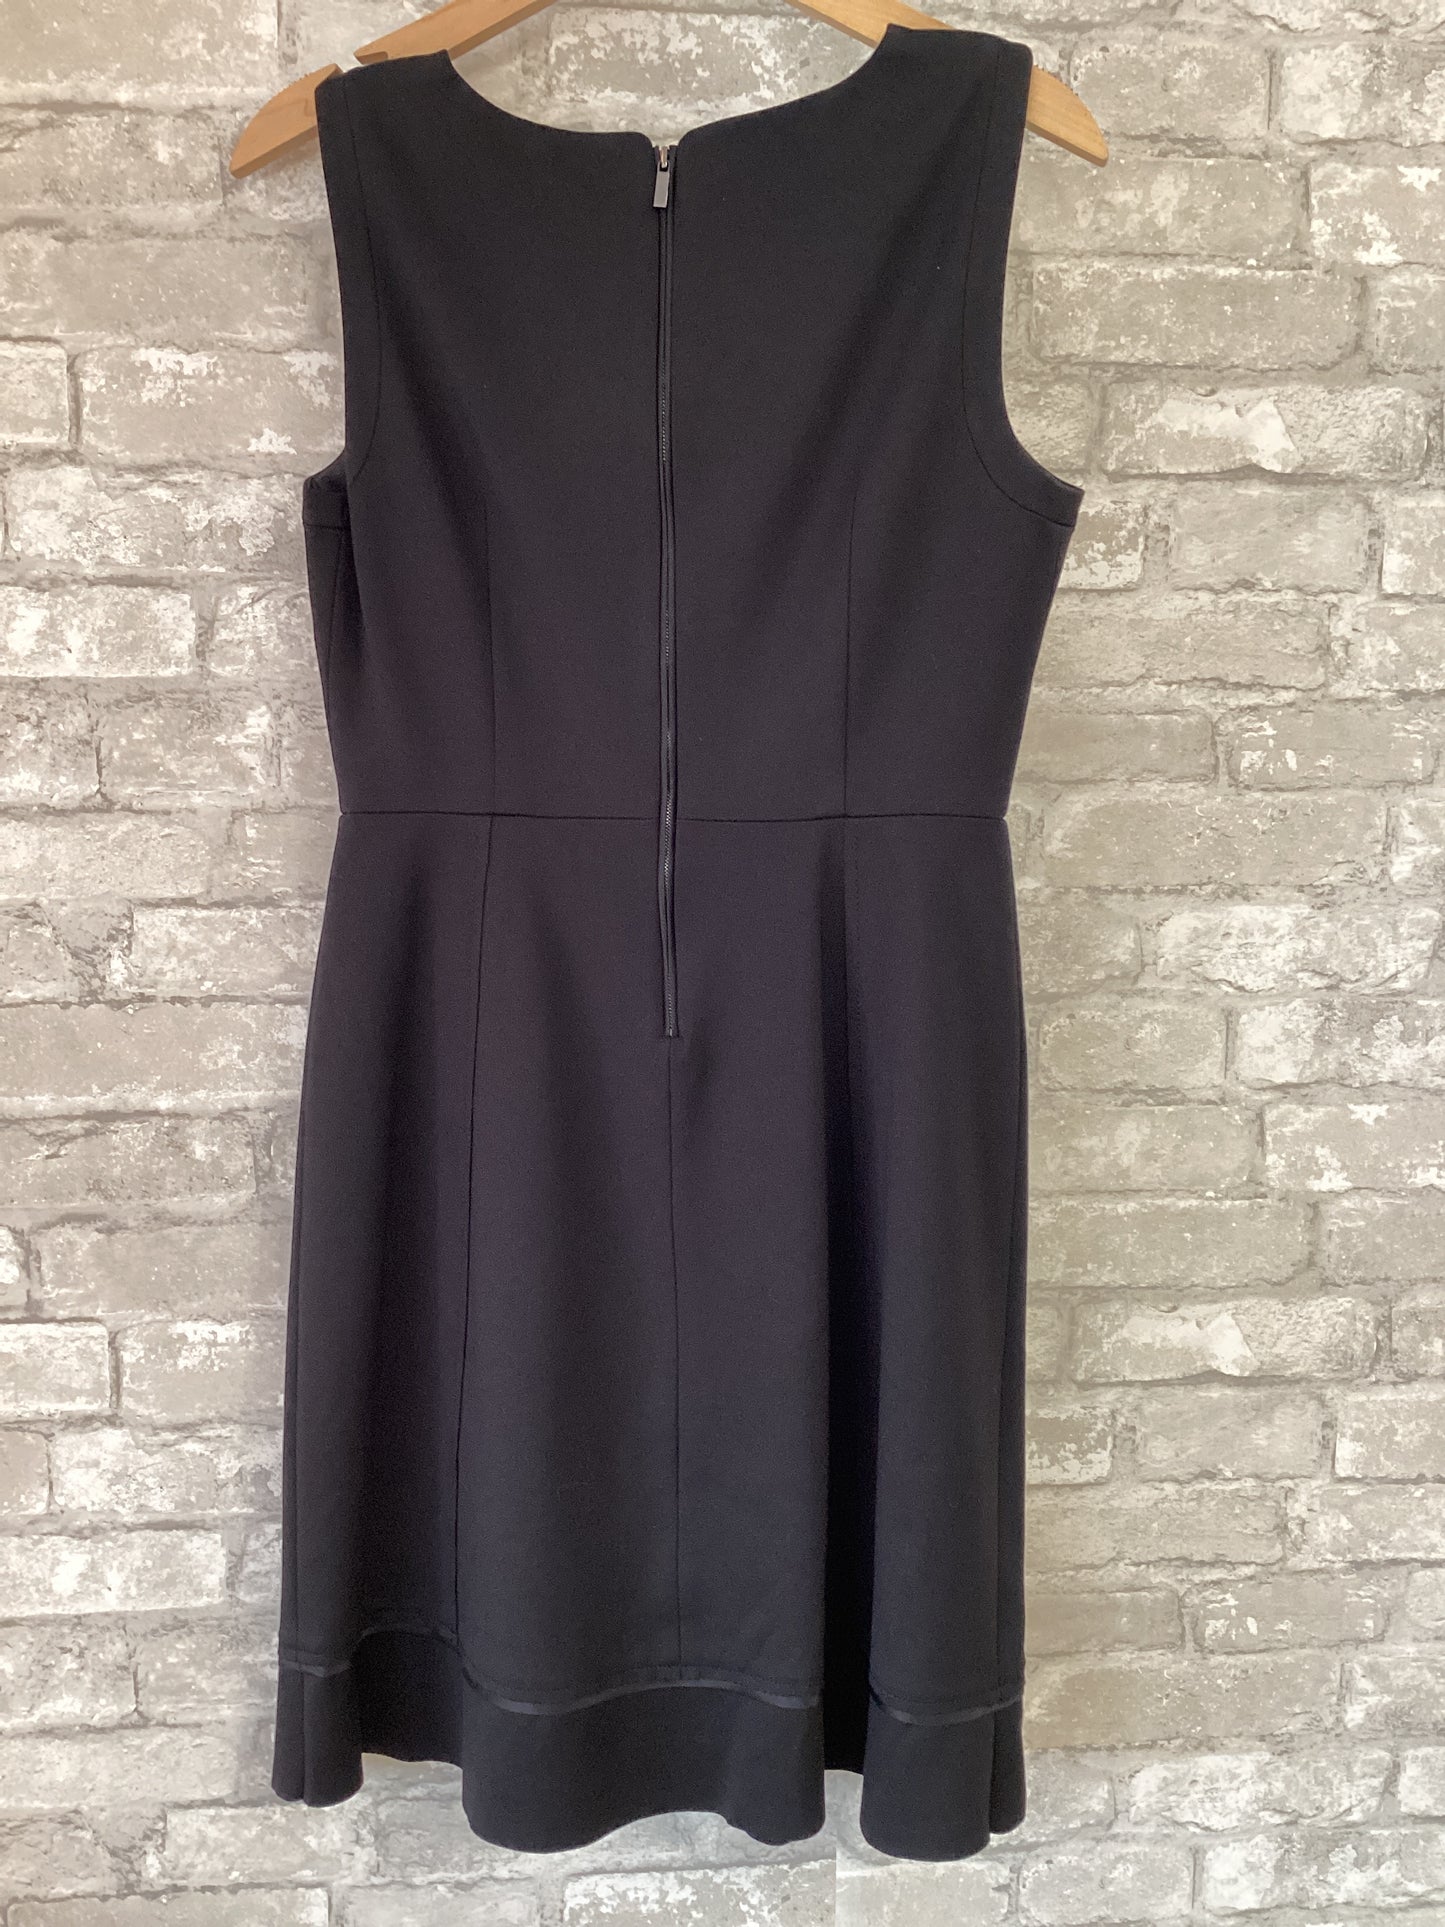 Elie Tahari Size M/8 Black Dress